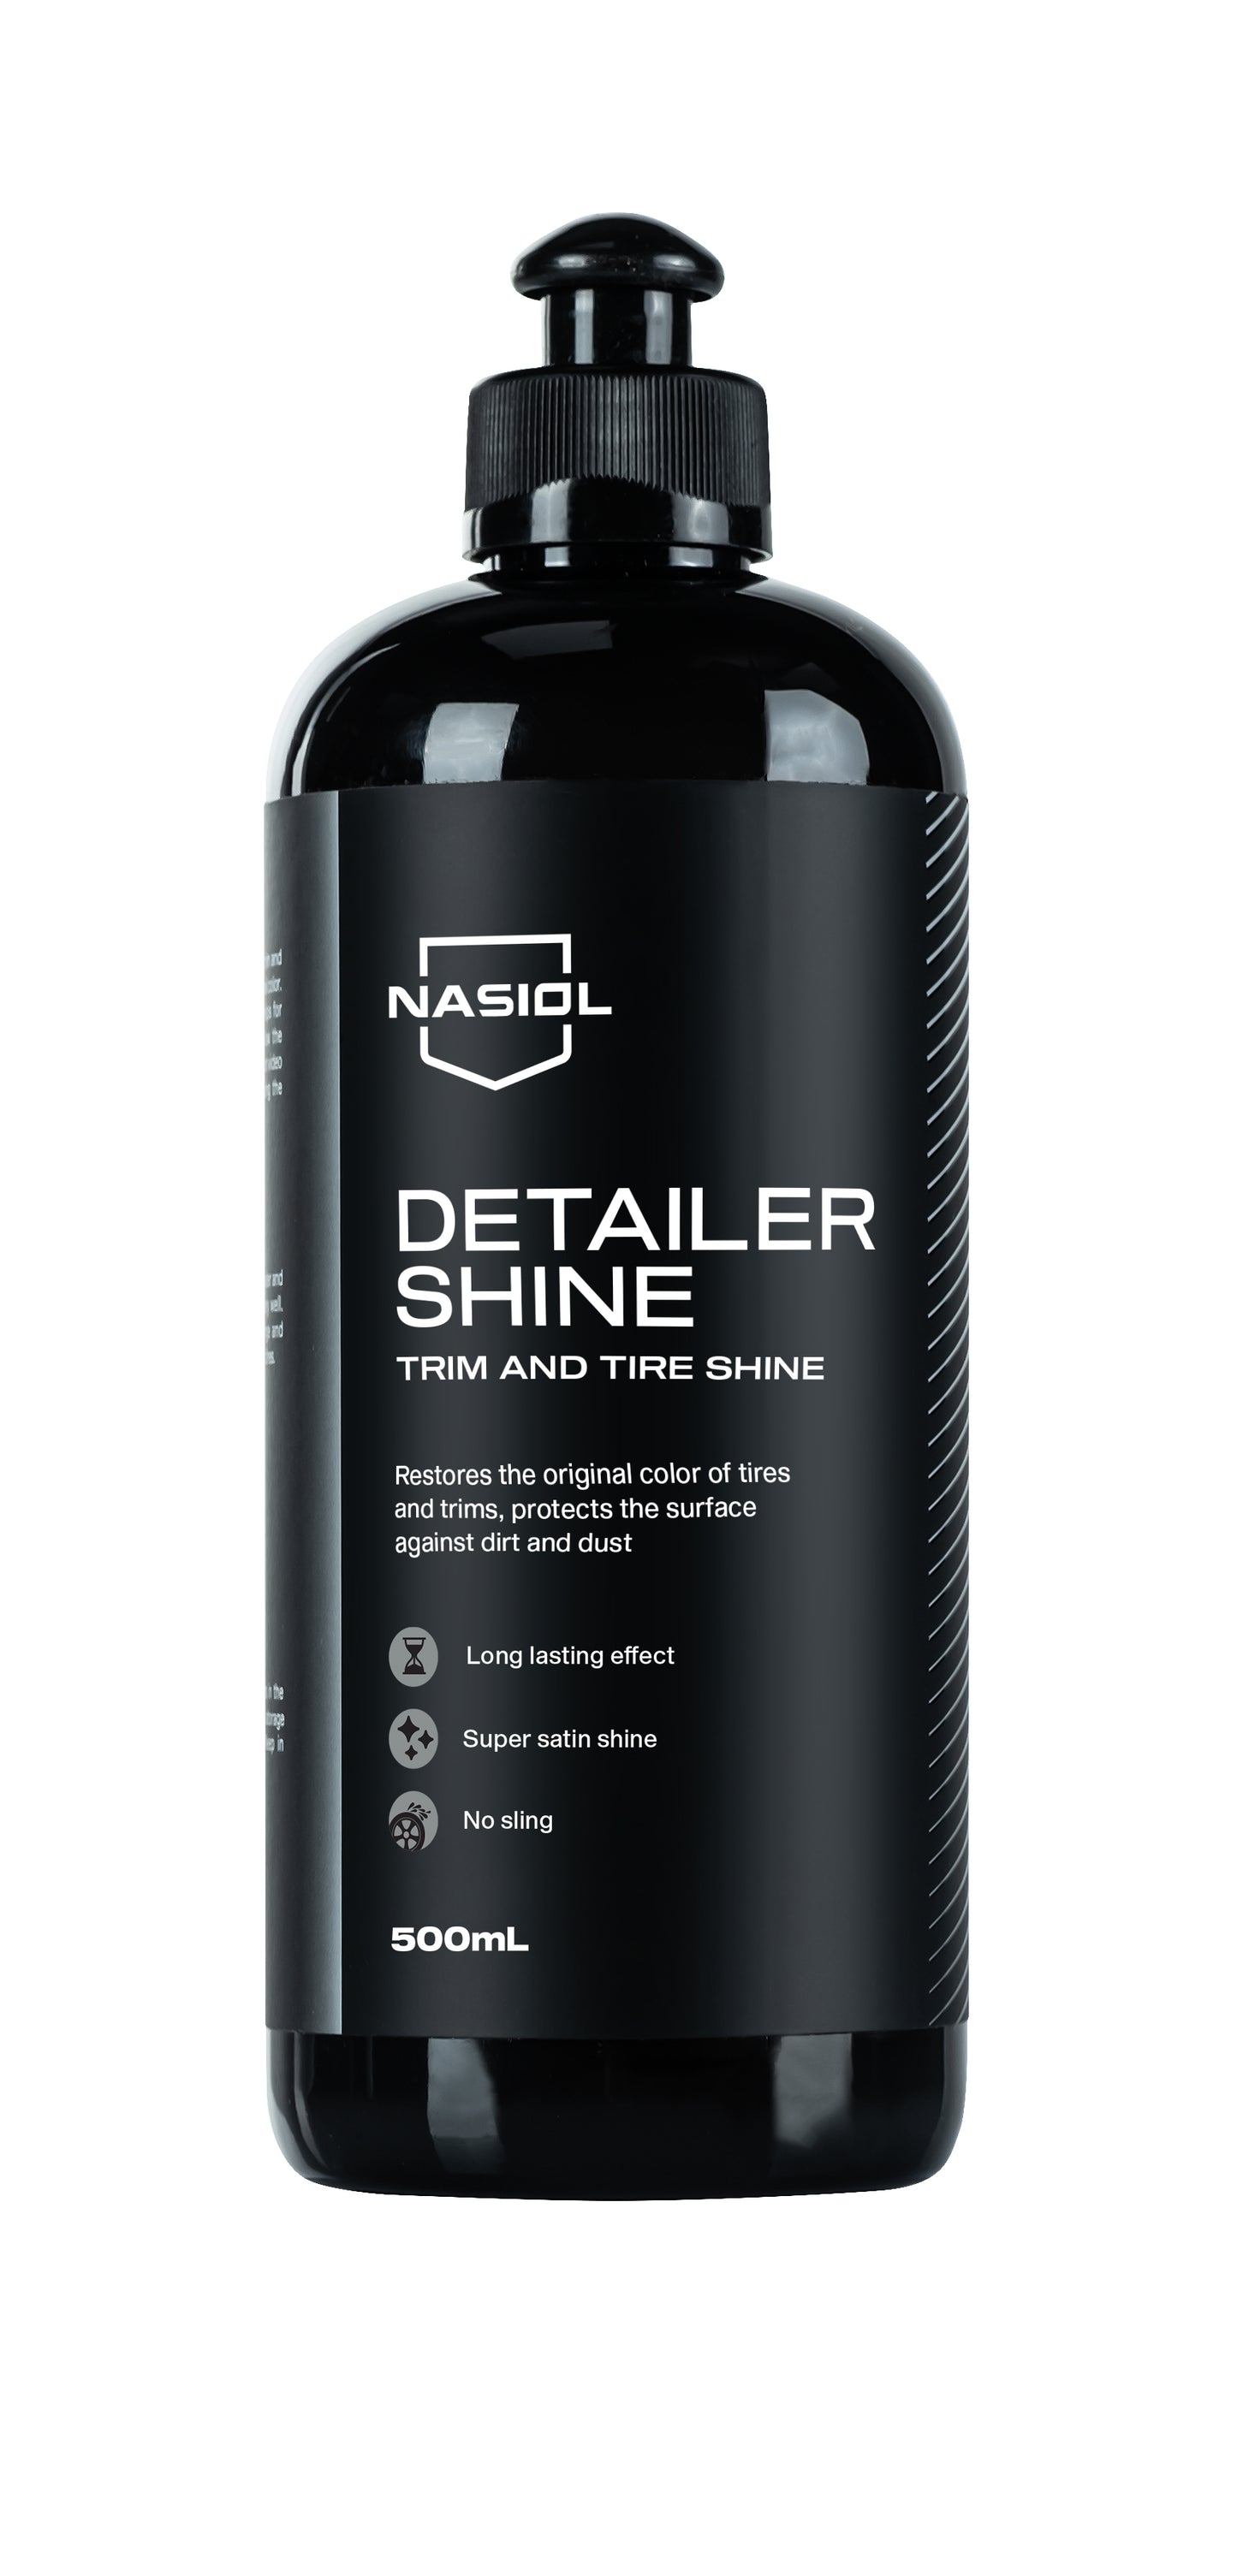 Nasiol DetailerShine Trim and Tire Shine 500mL